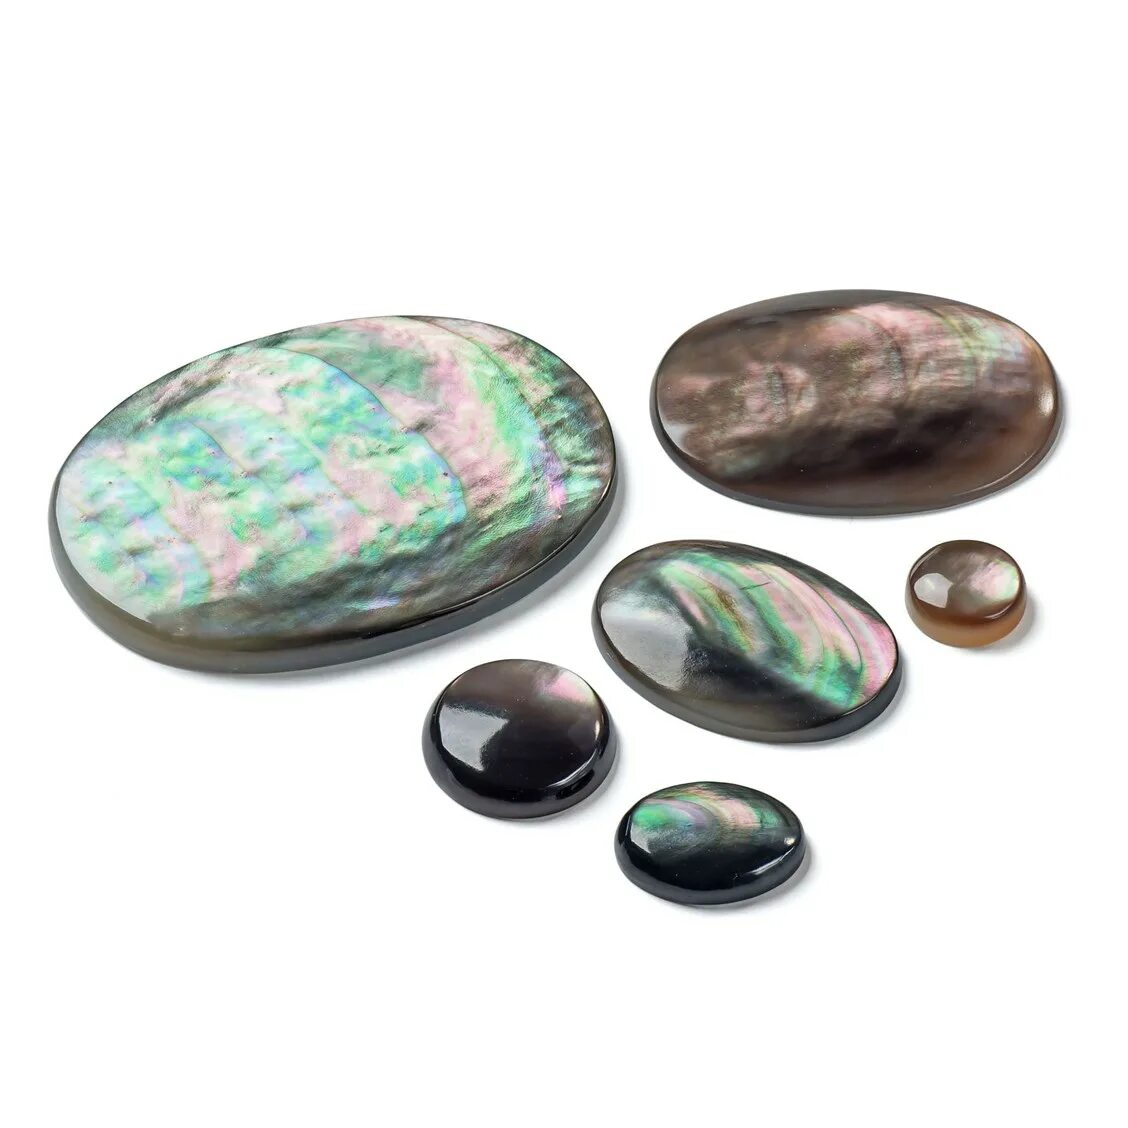 Гелиос перламутр камень. Перламутровый камень гелиотис. Цветной перламутровые камень. Зеленый перламутровый камень. Перламутровые камни